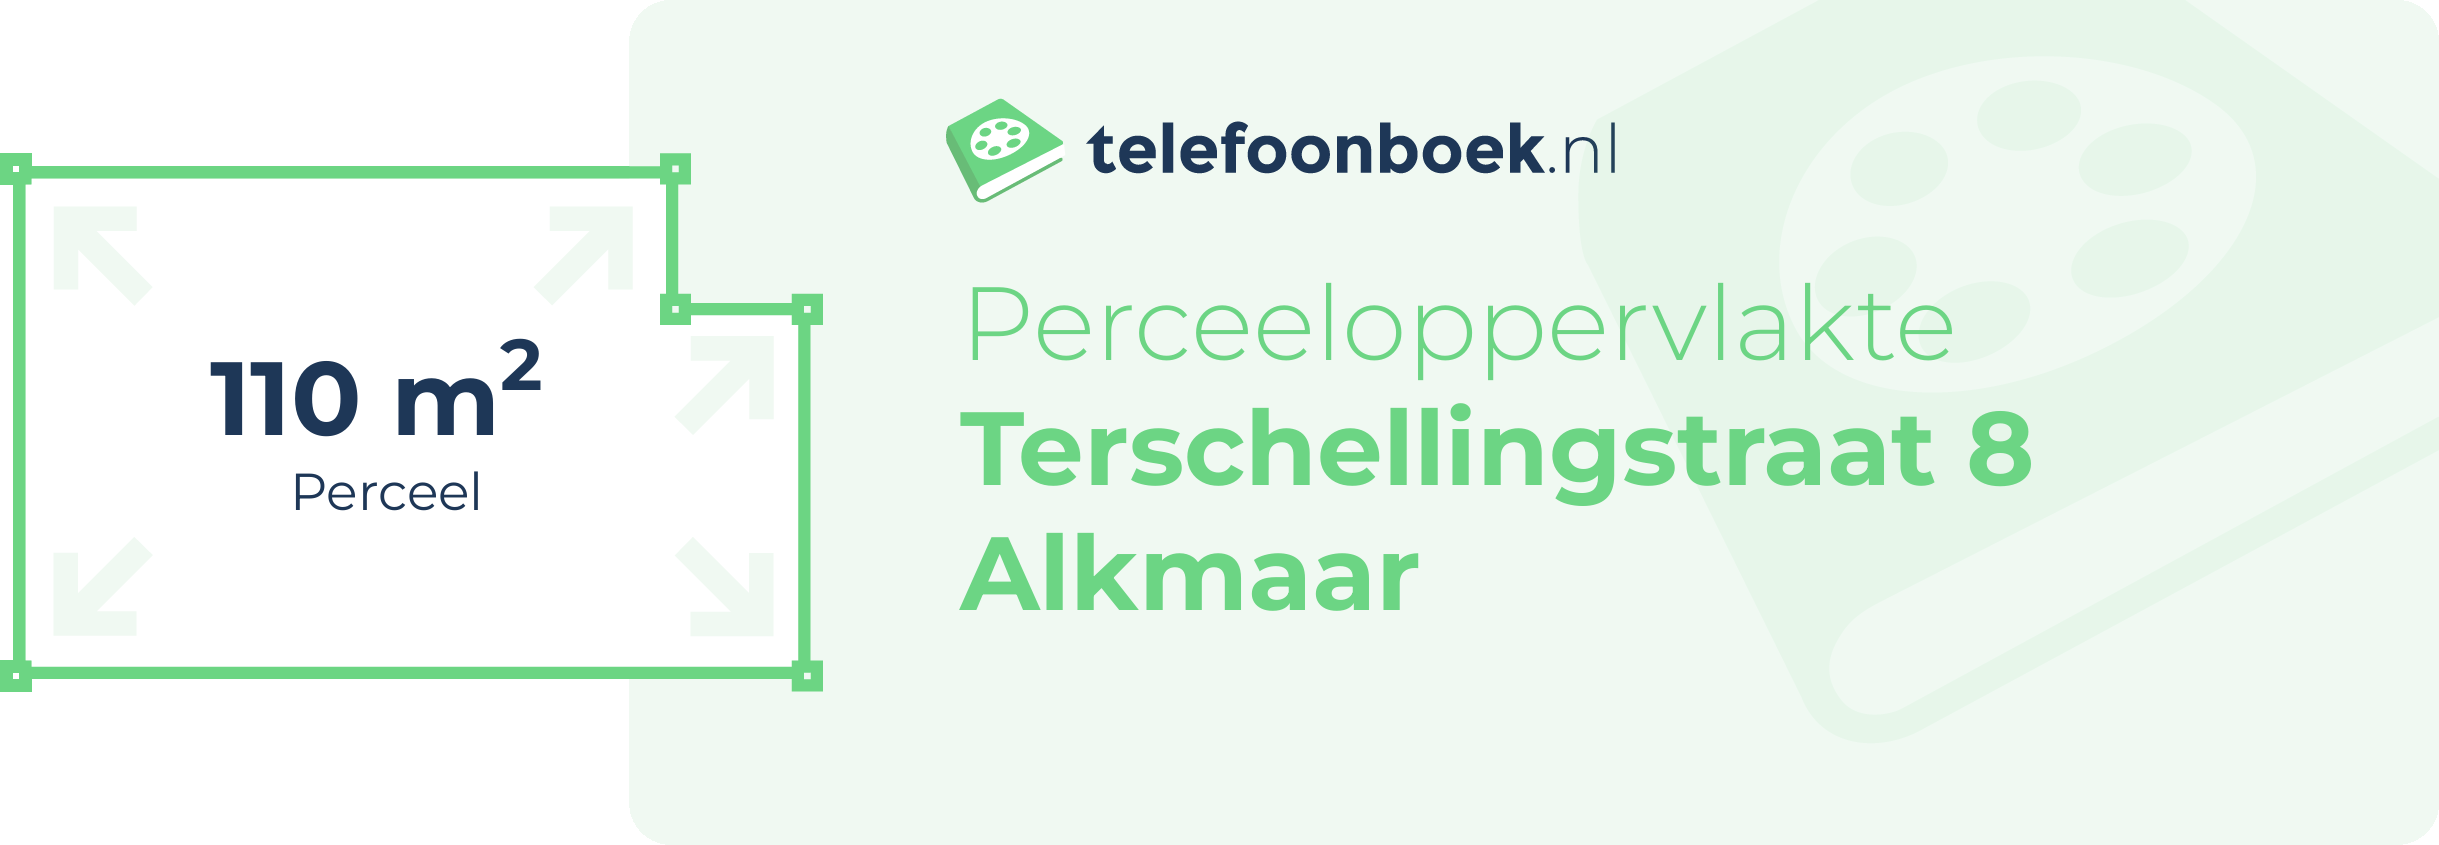 Perceeloppervlakte Terschellingstraat 8 Alkmaar